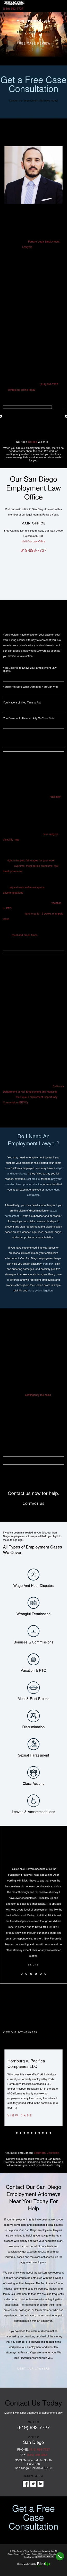 Ferraro Vega Employment Lawyers, Inc. - San Diego CA Lawyers